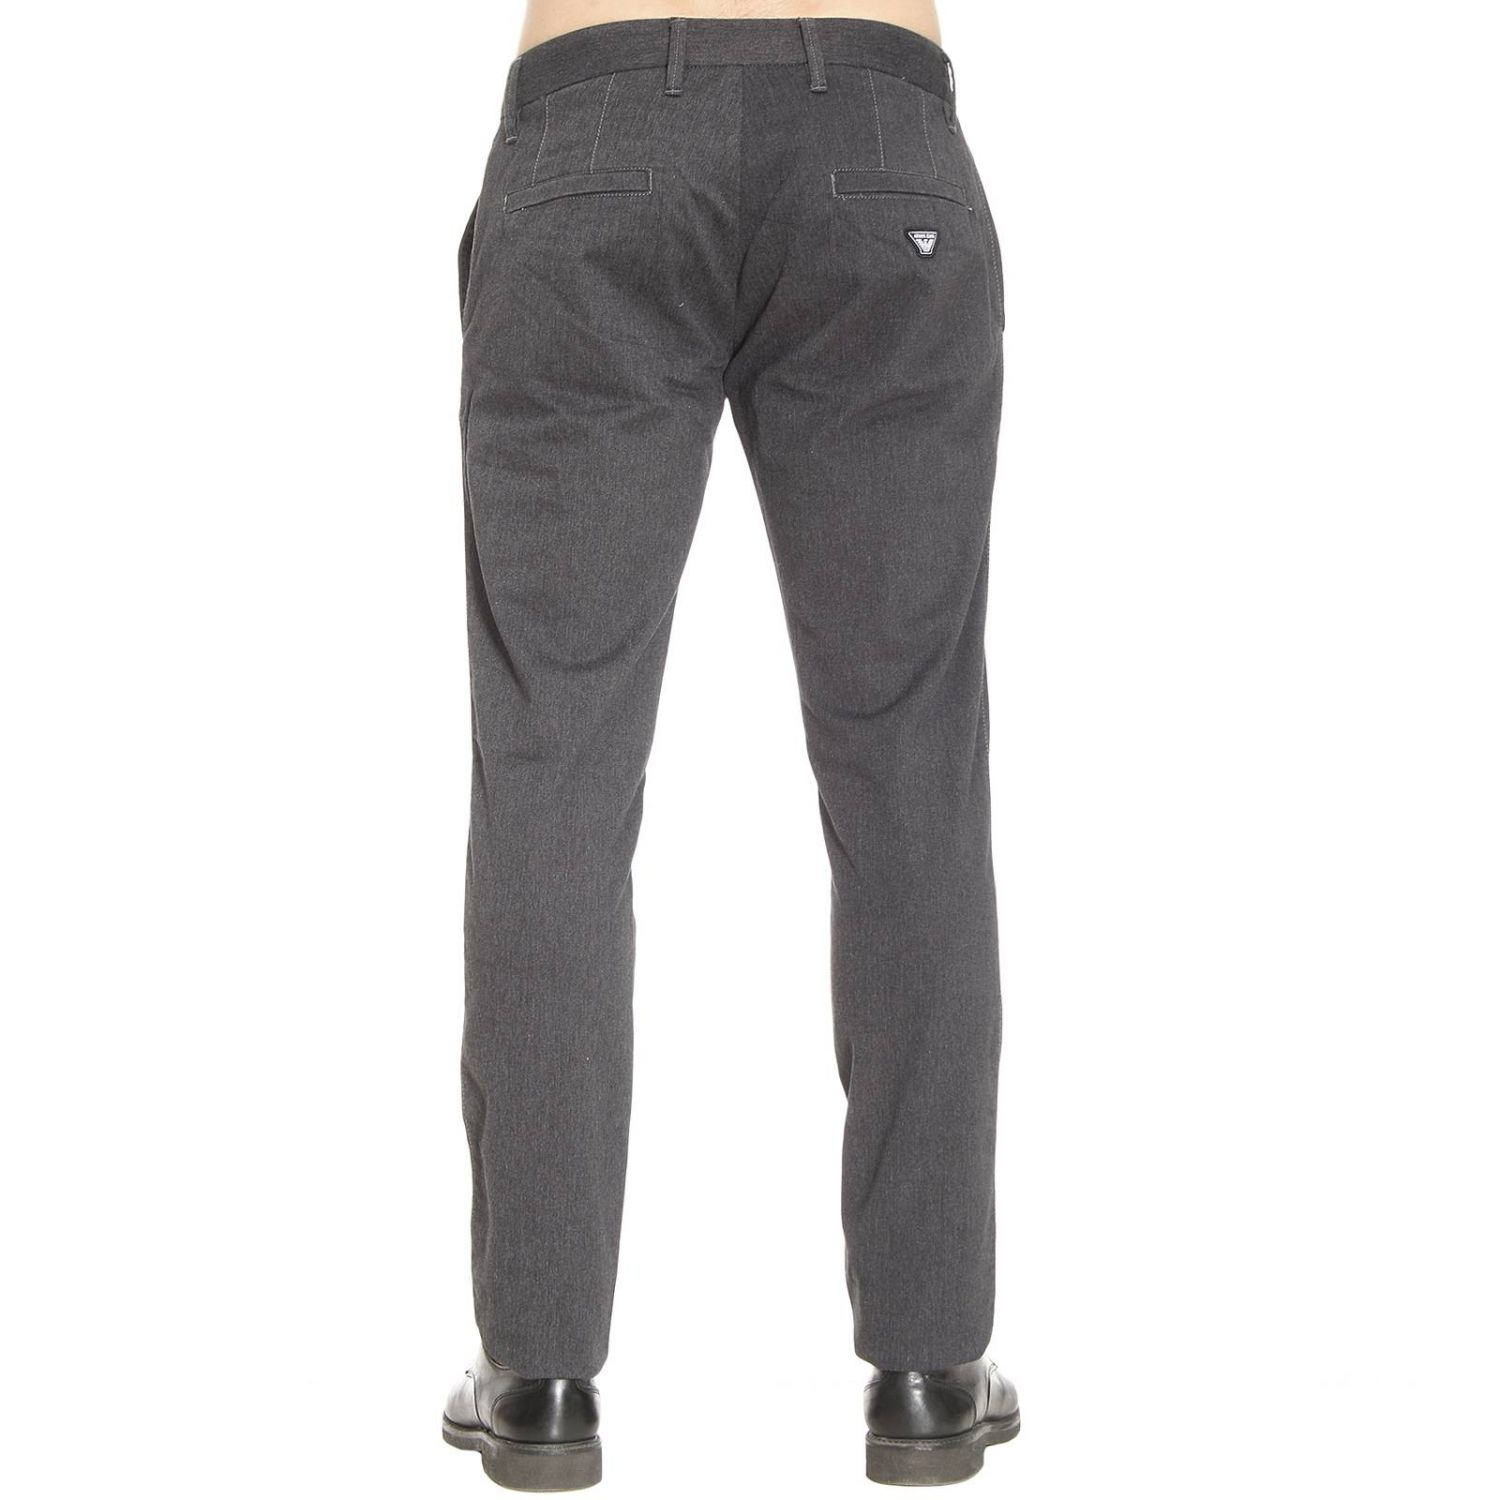 Lyst - Armani Jeans Pants Trouser Man in Gray for Men